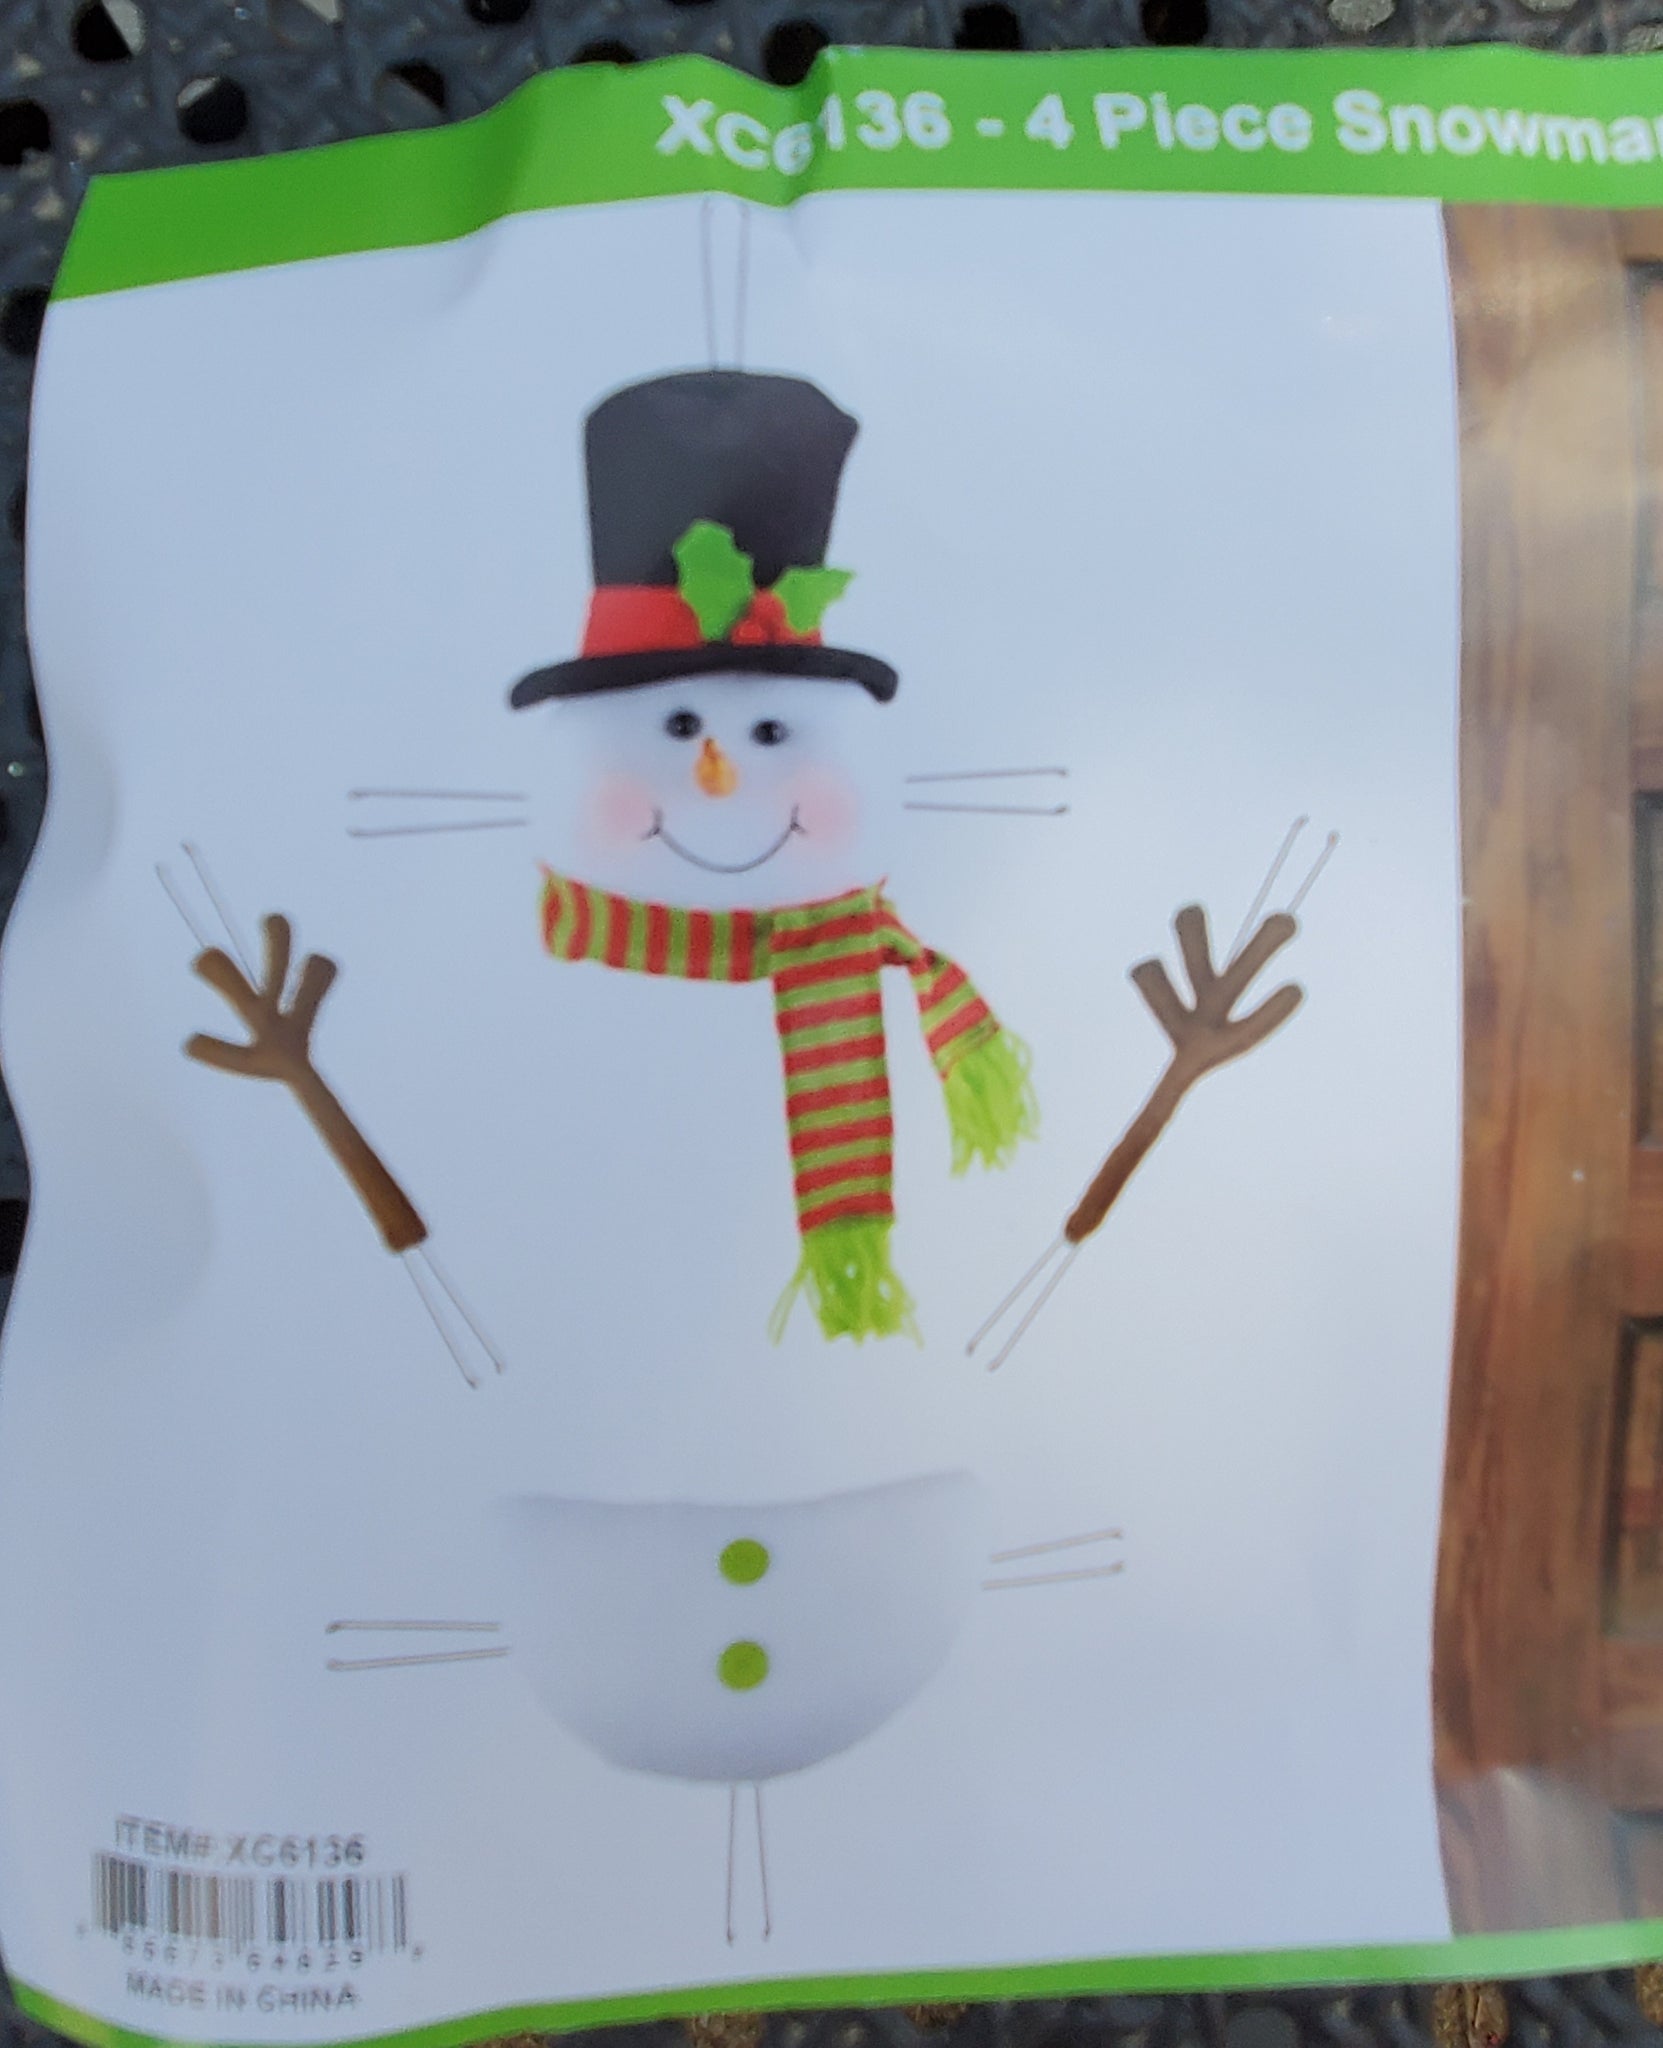 Snowman Wreath Attachment Kit, 4 Piece 27x 25l Snowman Wreath Making Kit.  XC6194 